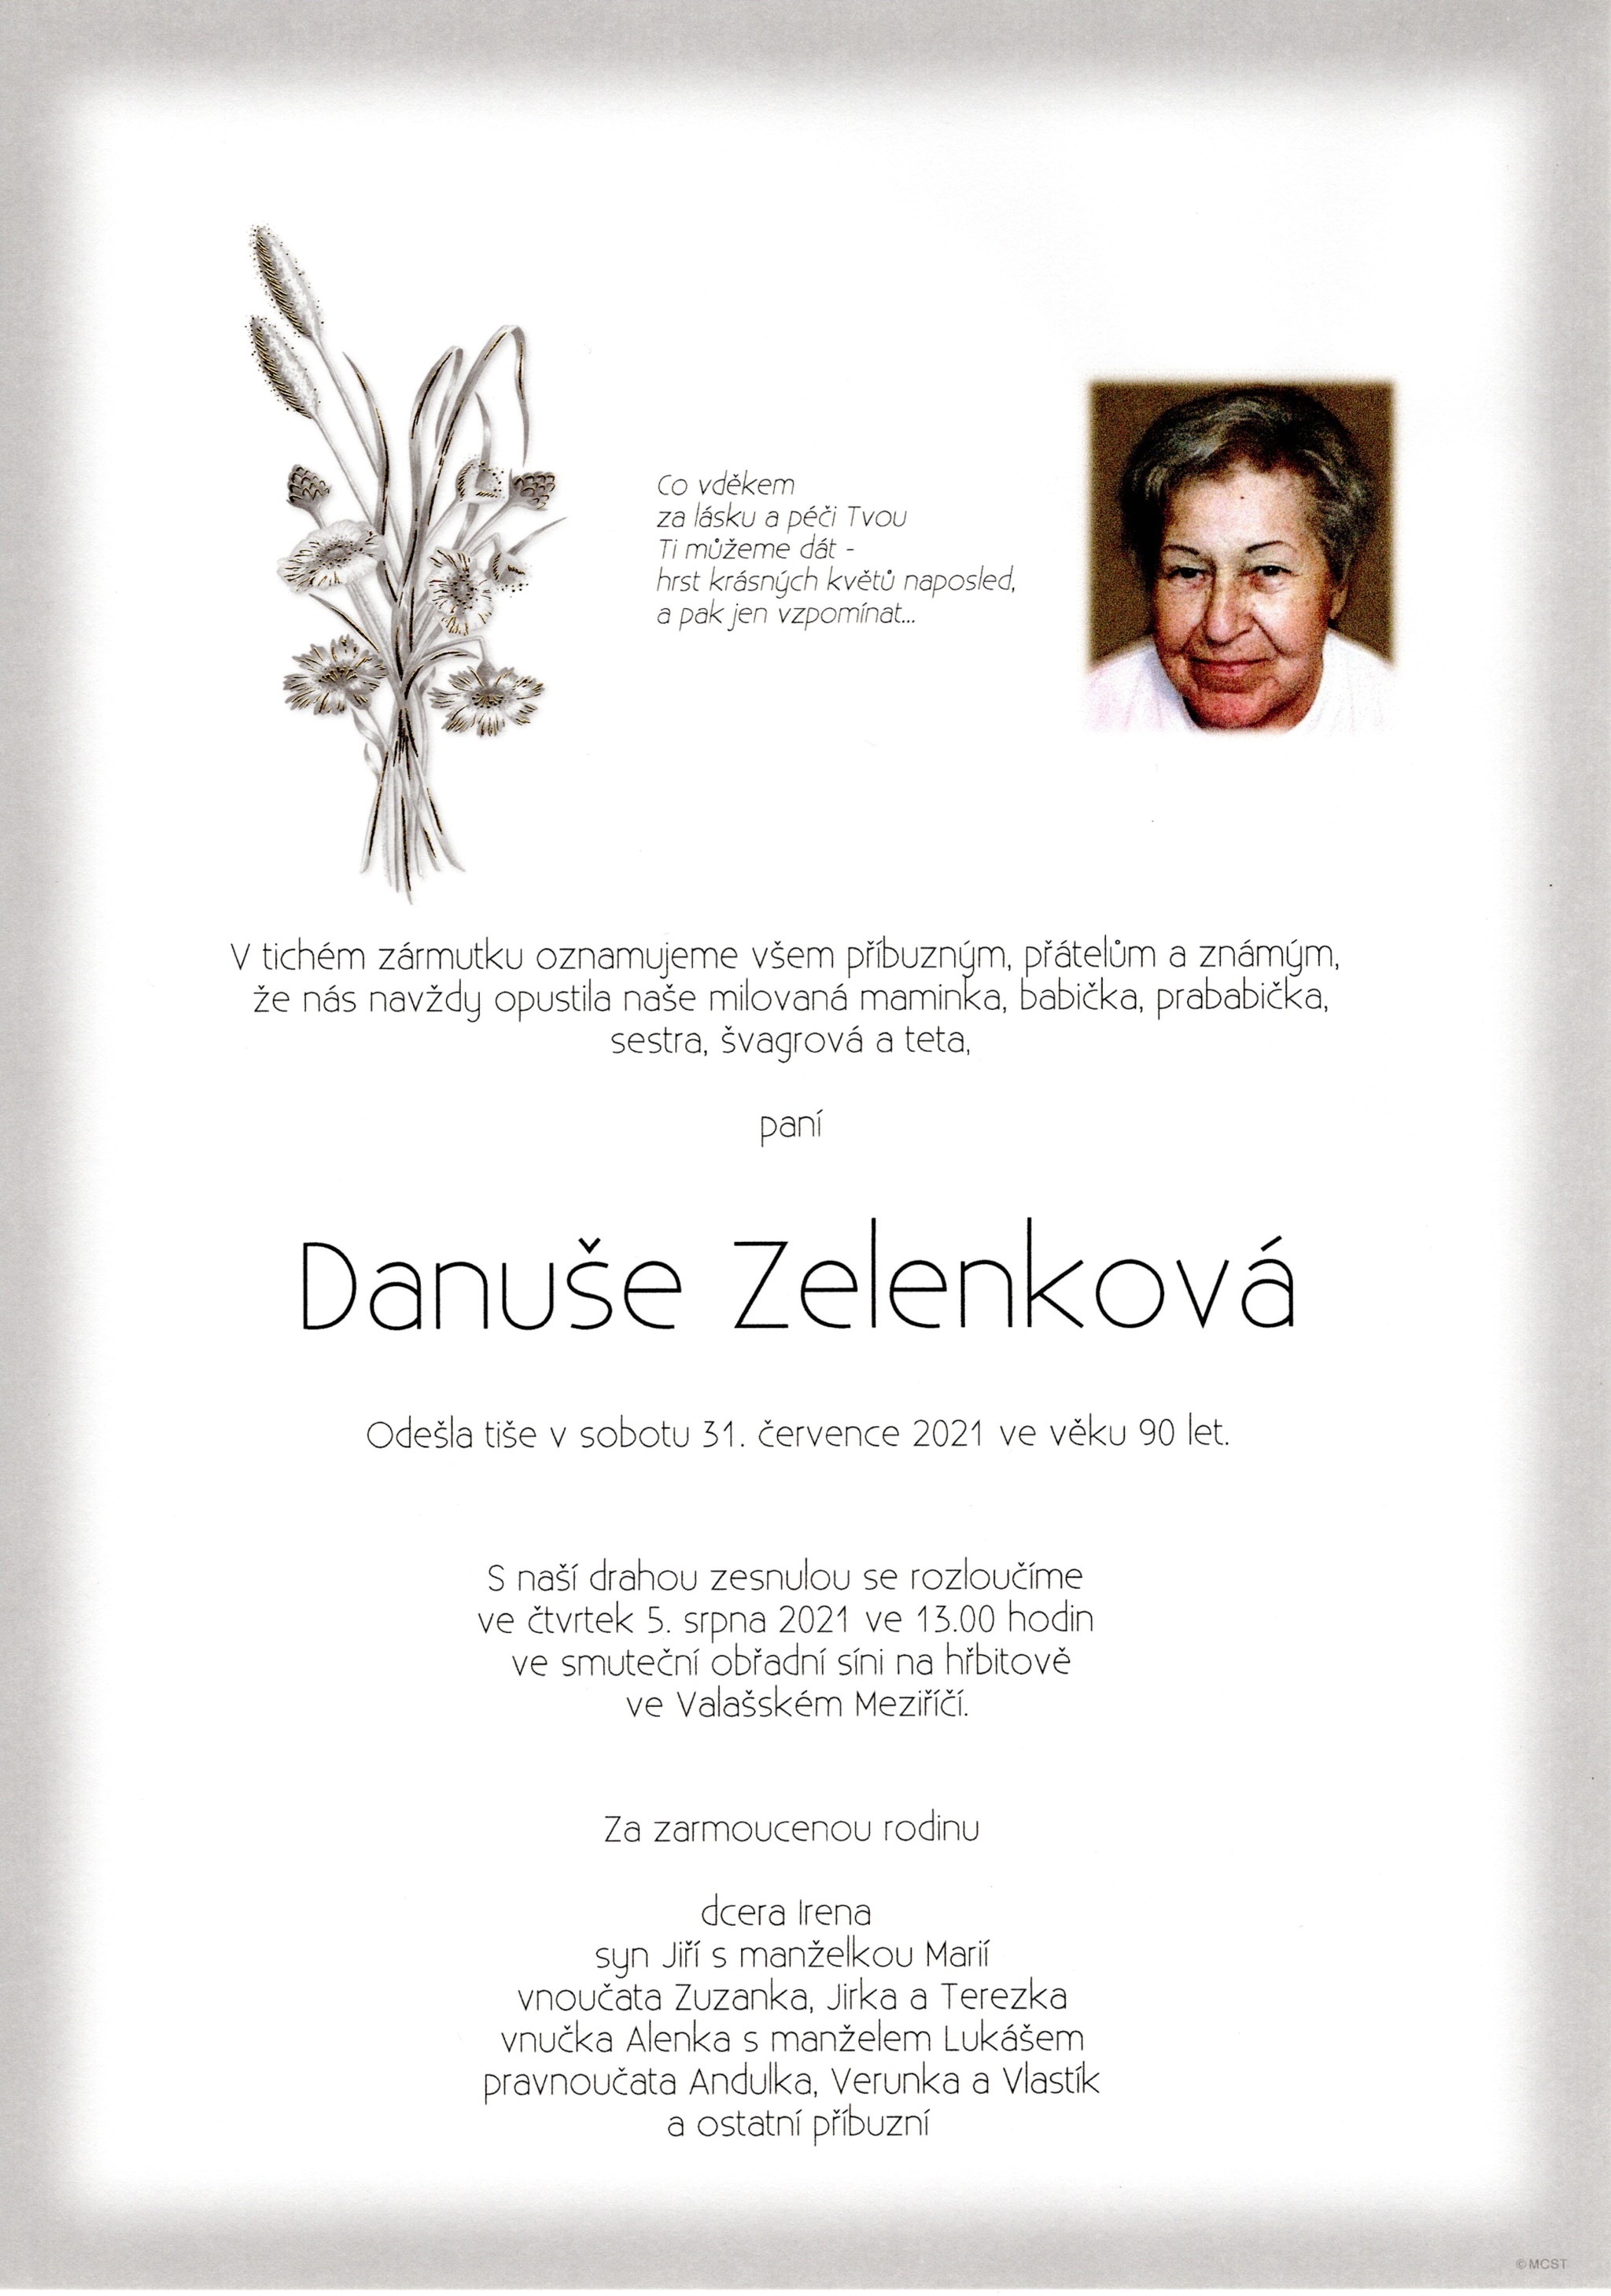 Danuše Zelenková